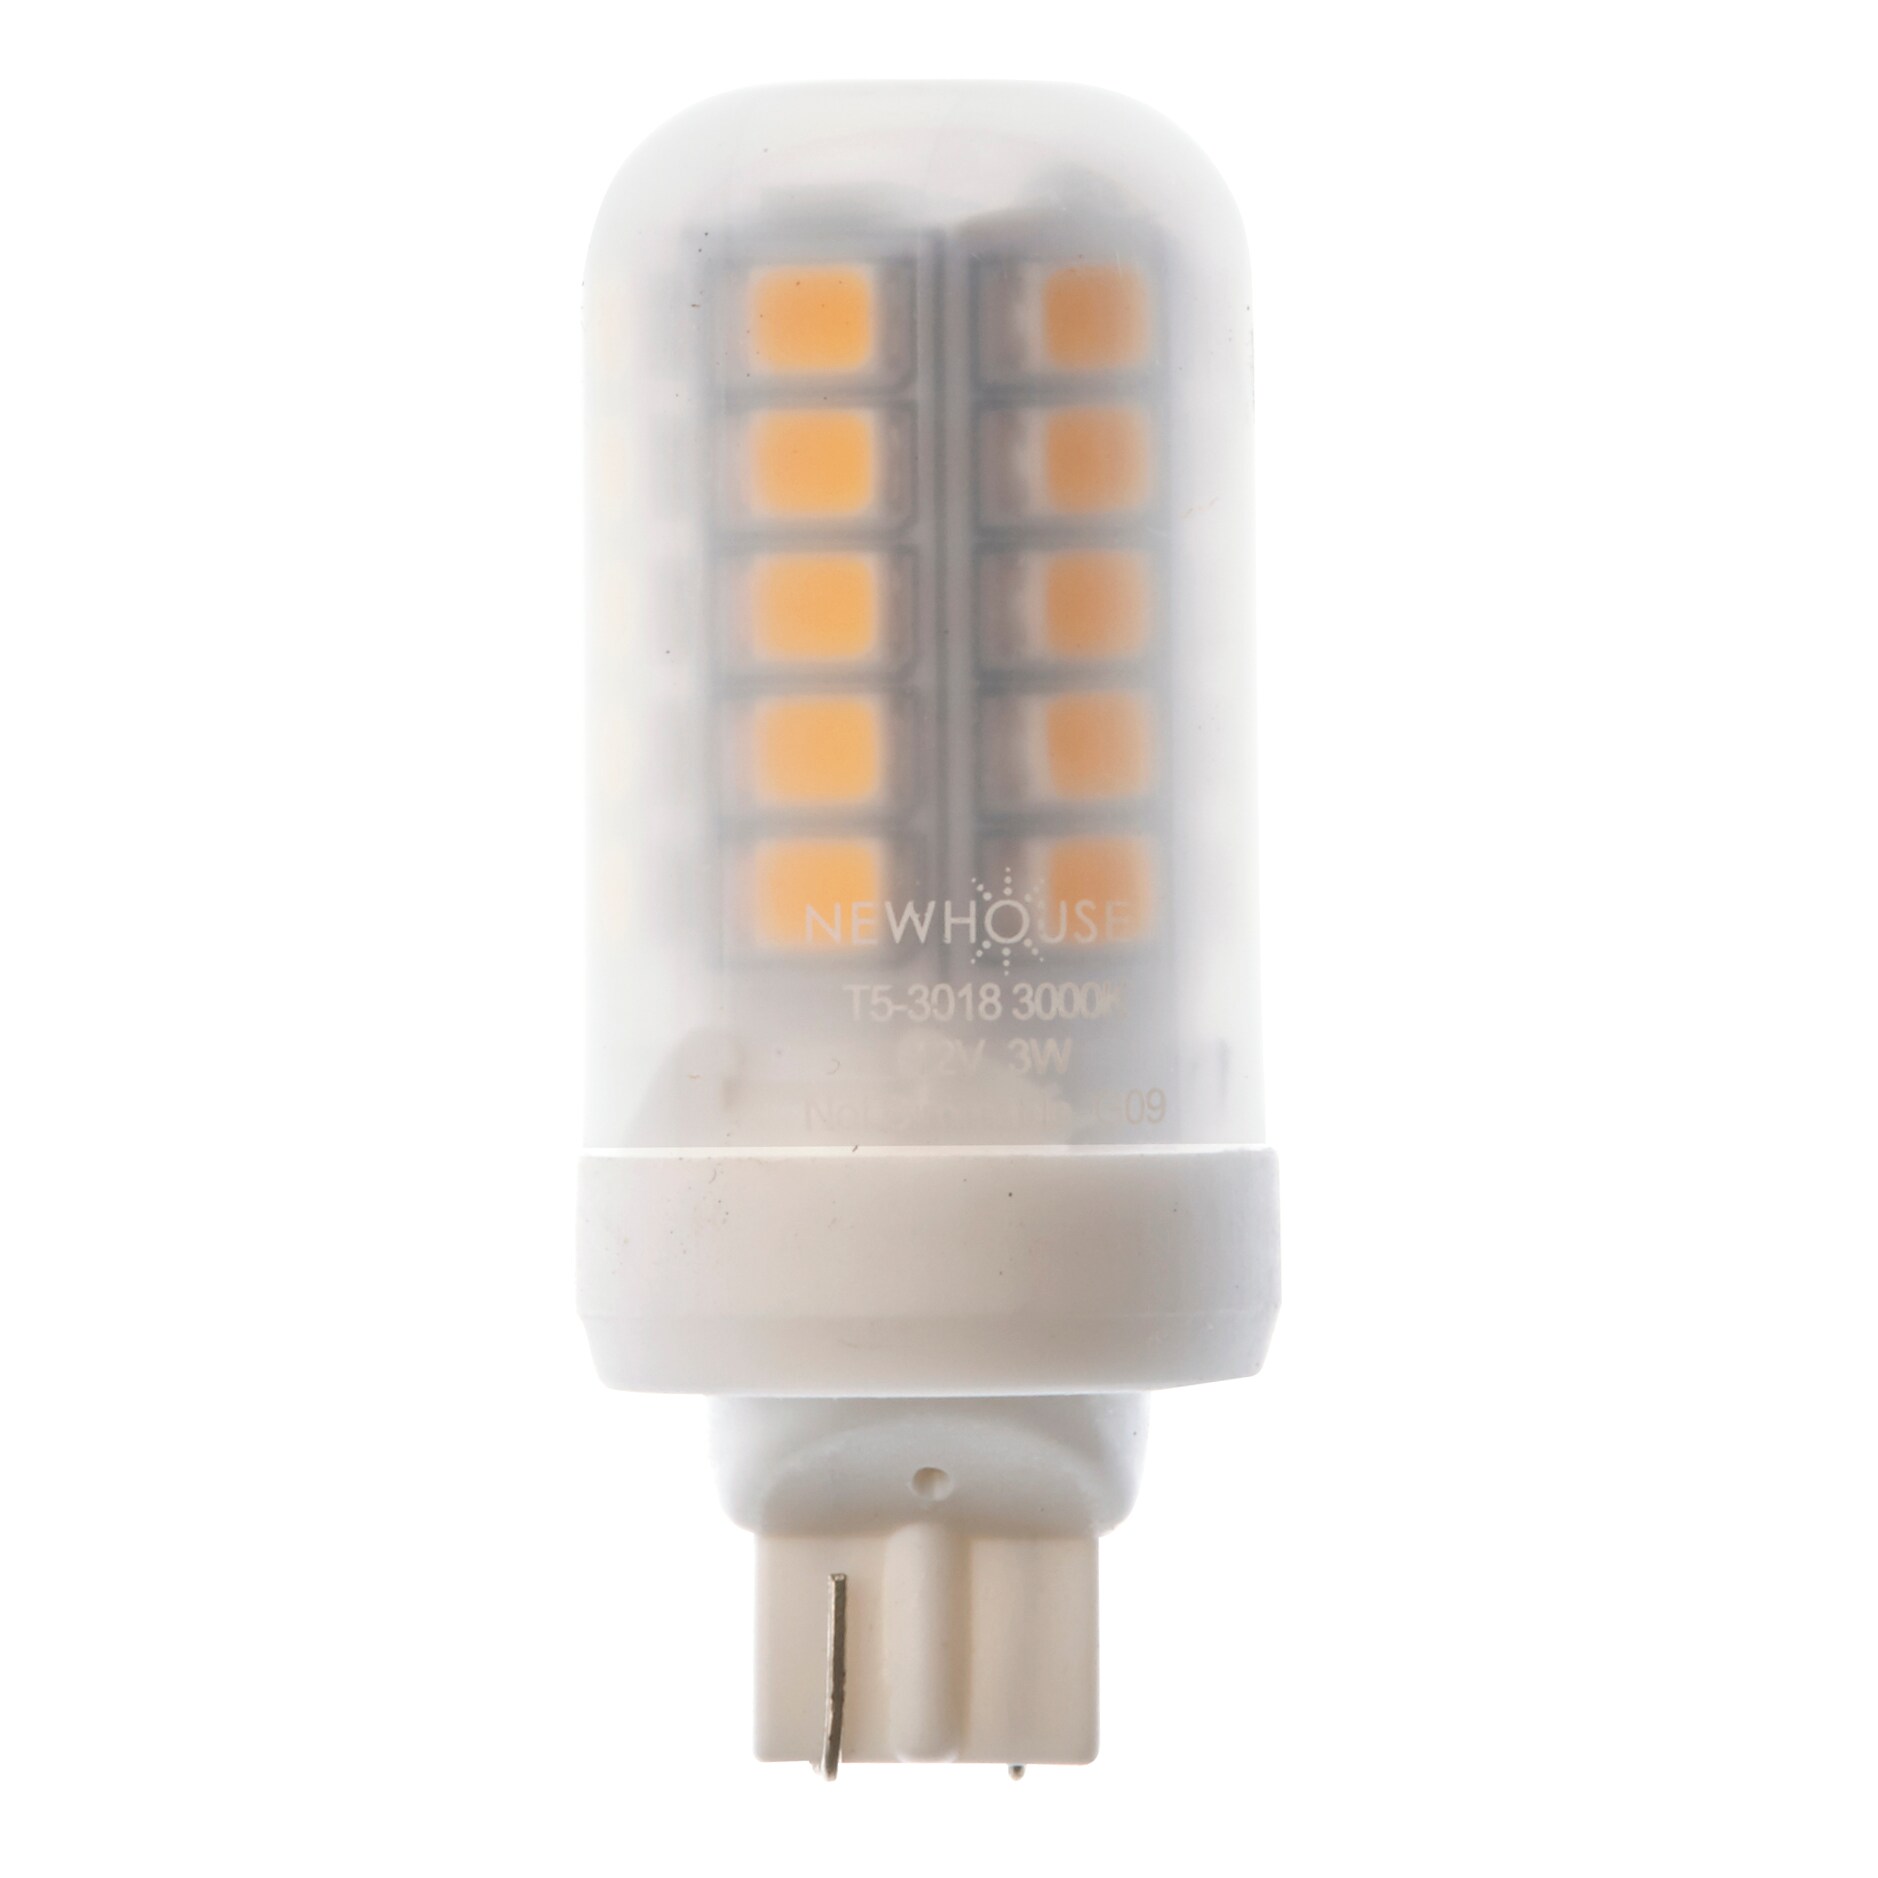 Newhouse Lighting G9 Warm White G9 Pin Base Light Bulb (4-Pack) at